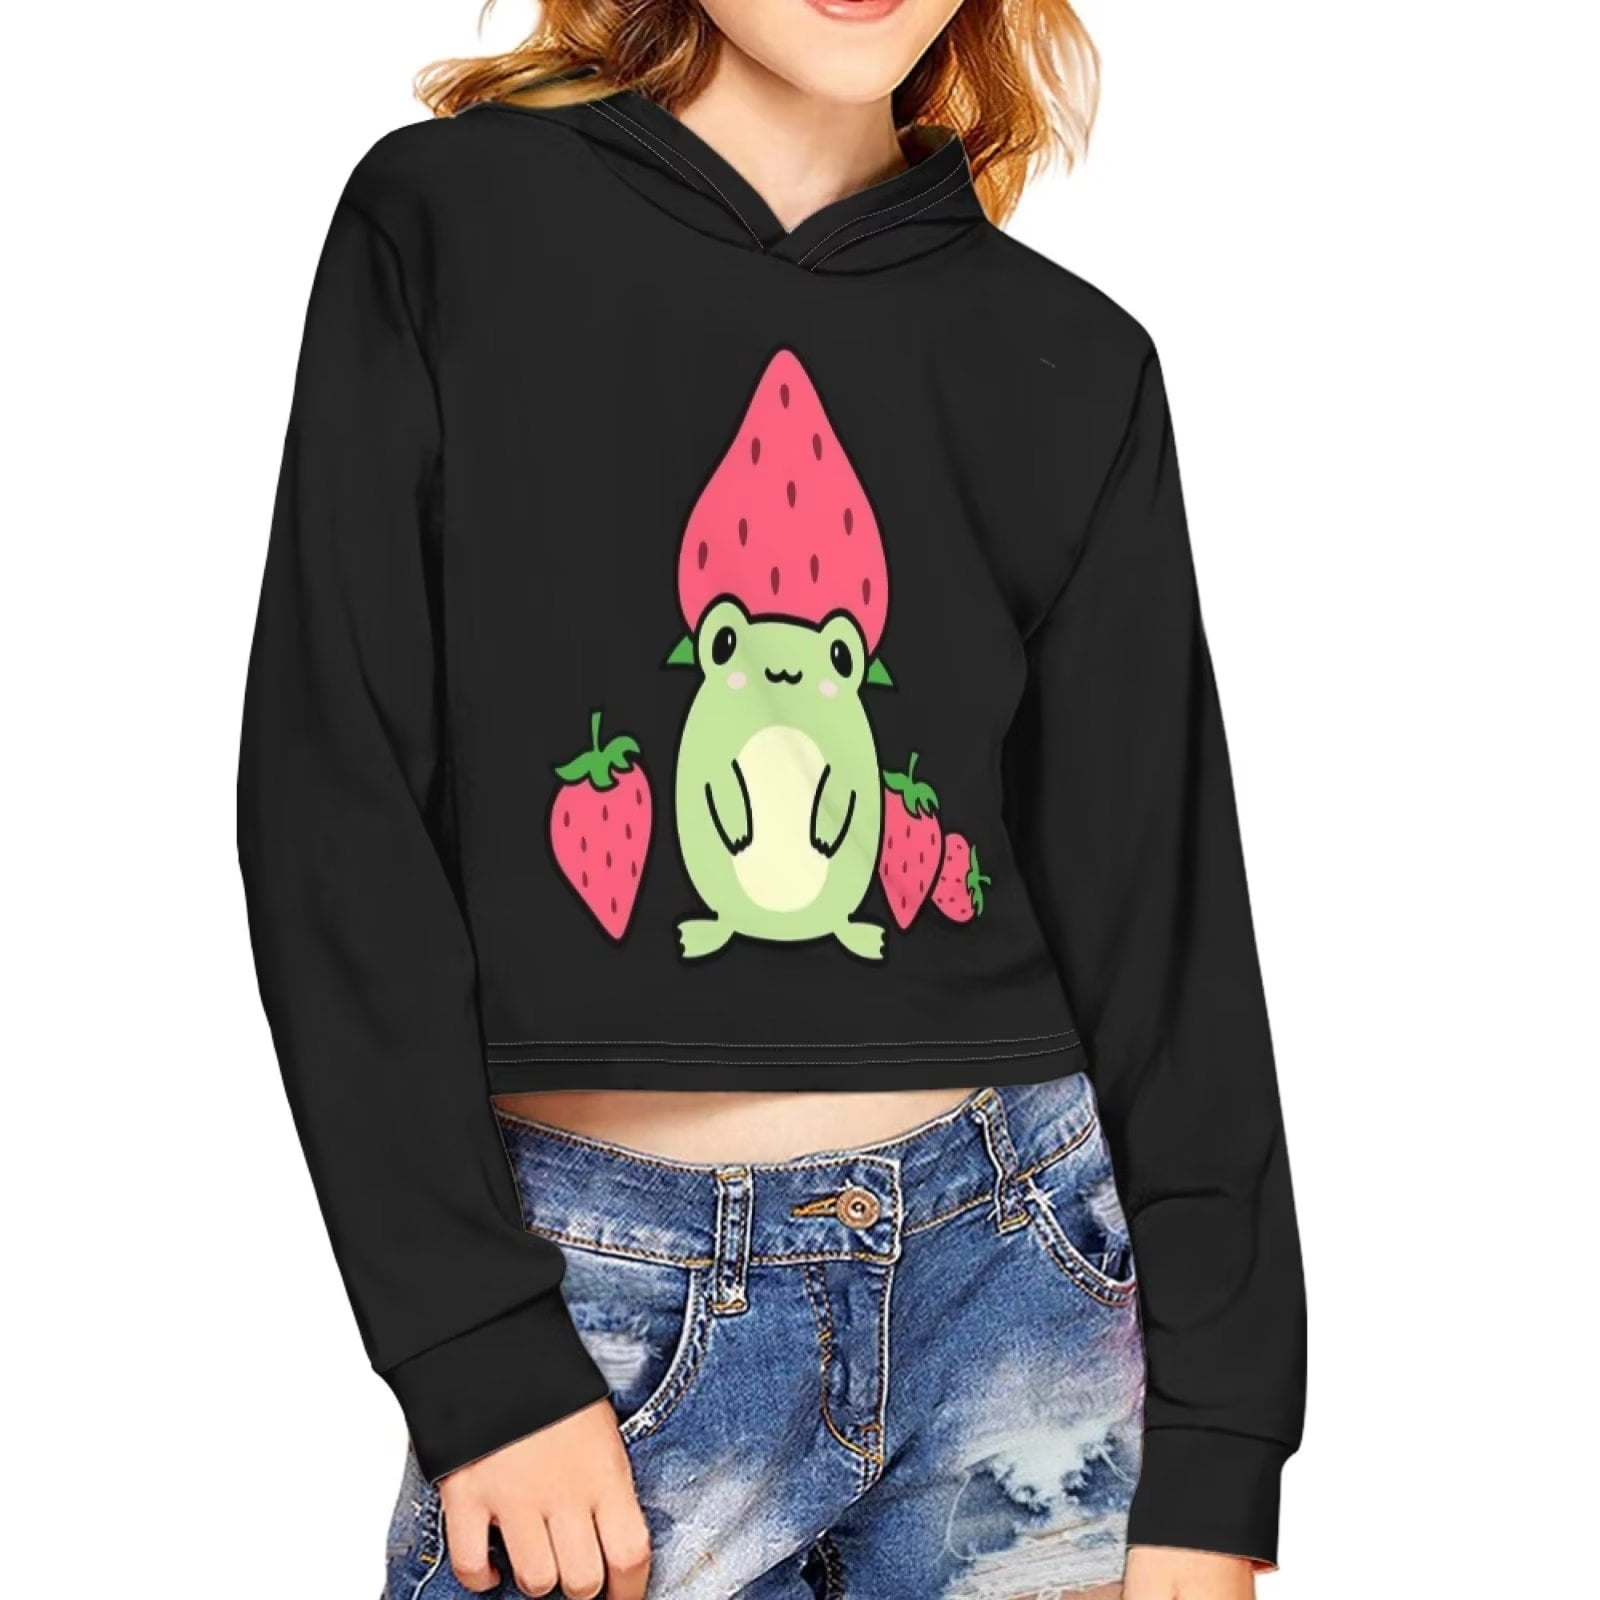 Pzuqiu Frog Strawberry Cute Crop Top Hoodies for Teen Girls